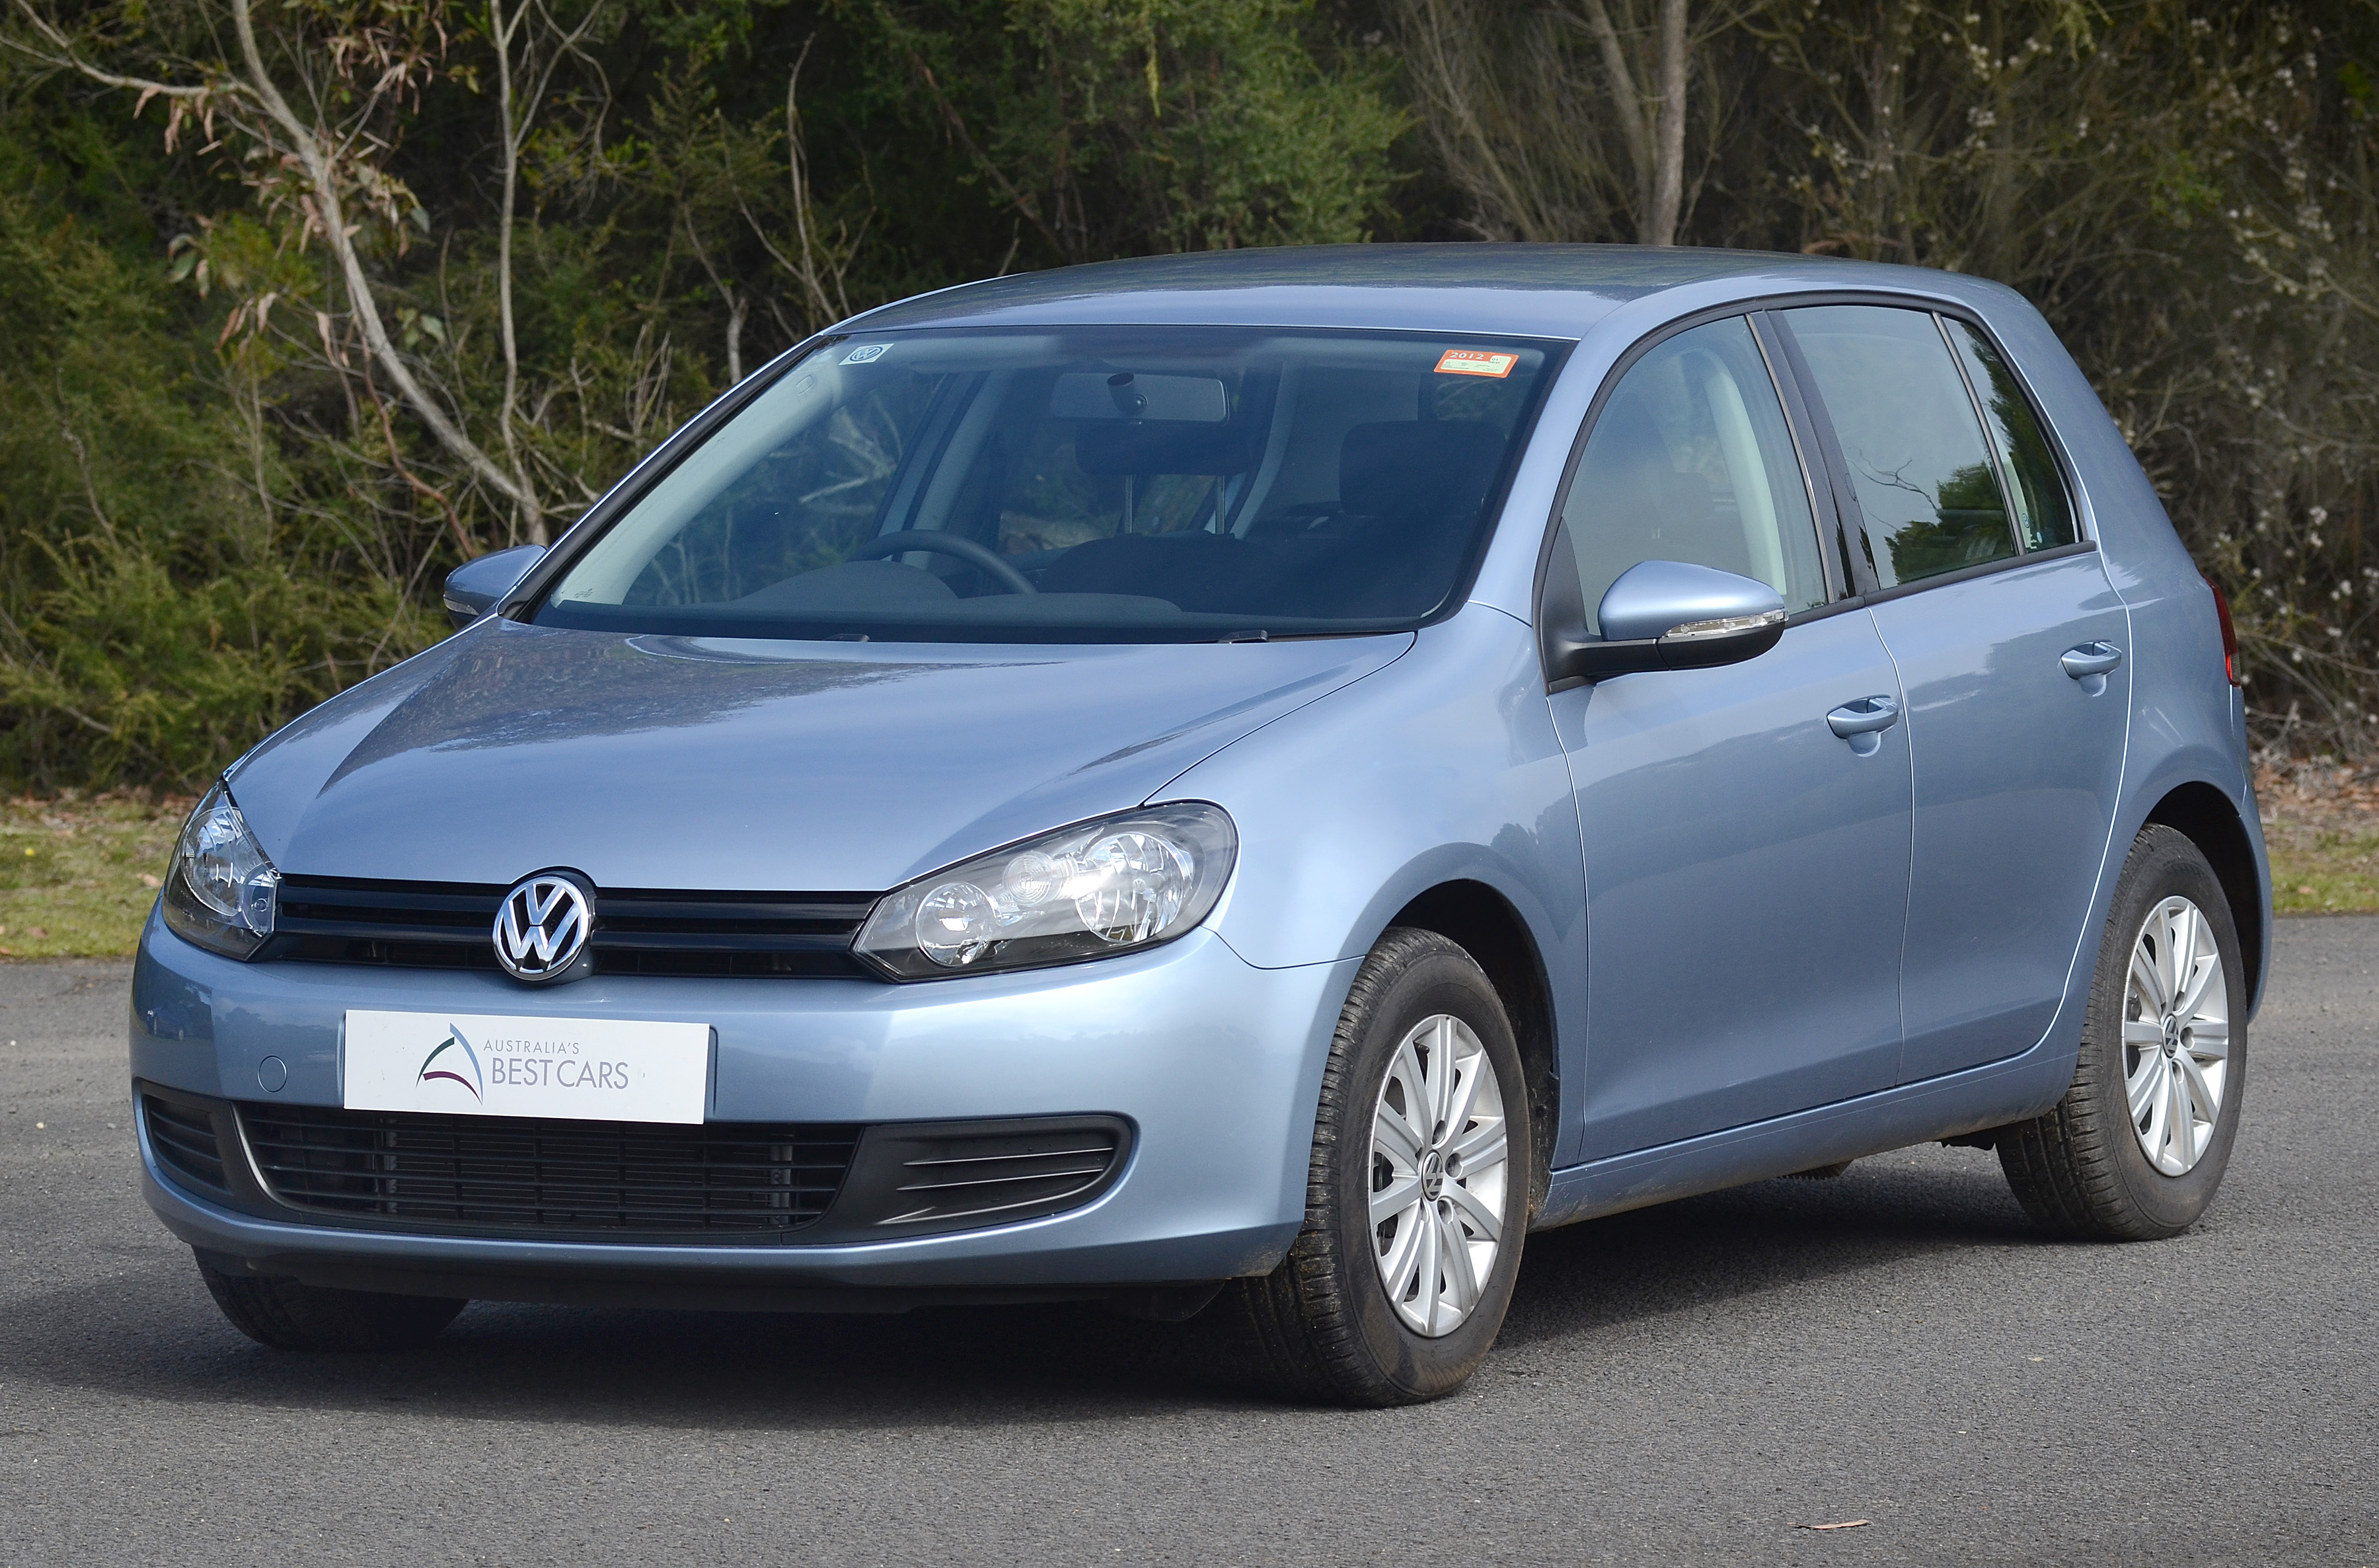 Volkswagen Golf 90 TSI Trendline - Best Small Car under $35,000 - Australias Best Cars - Flickr - NRMA New Cars